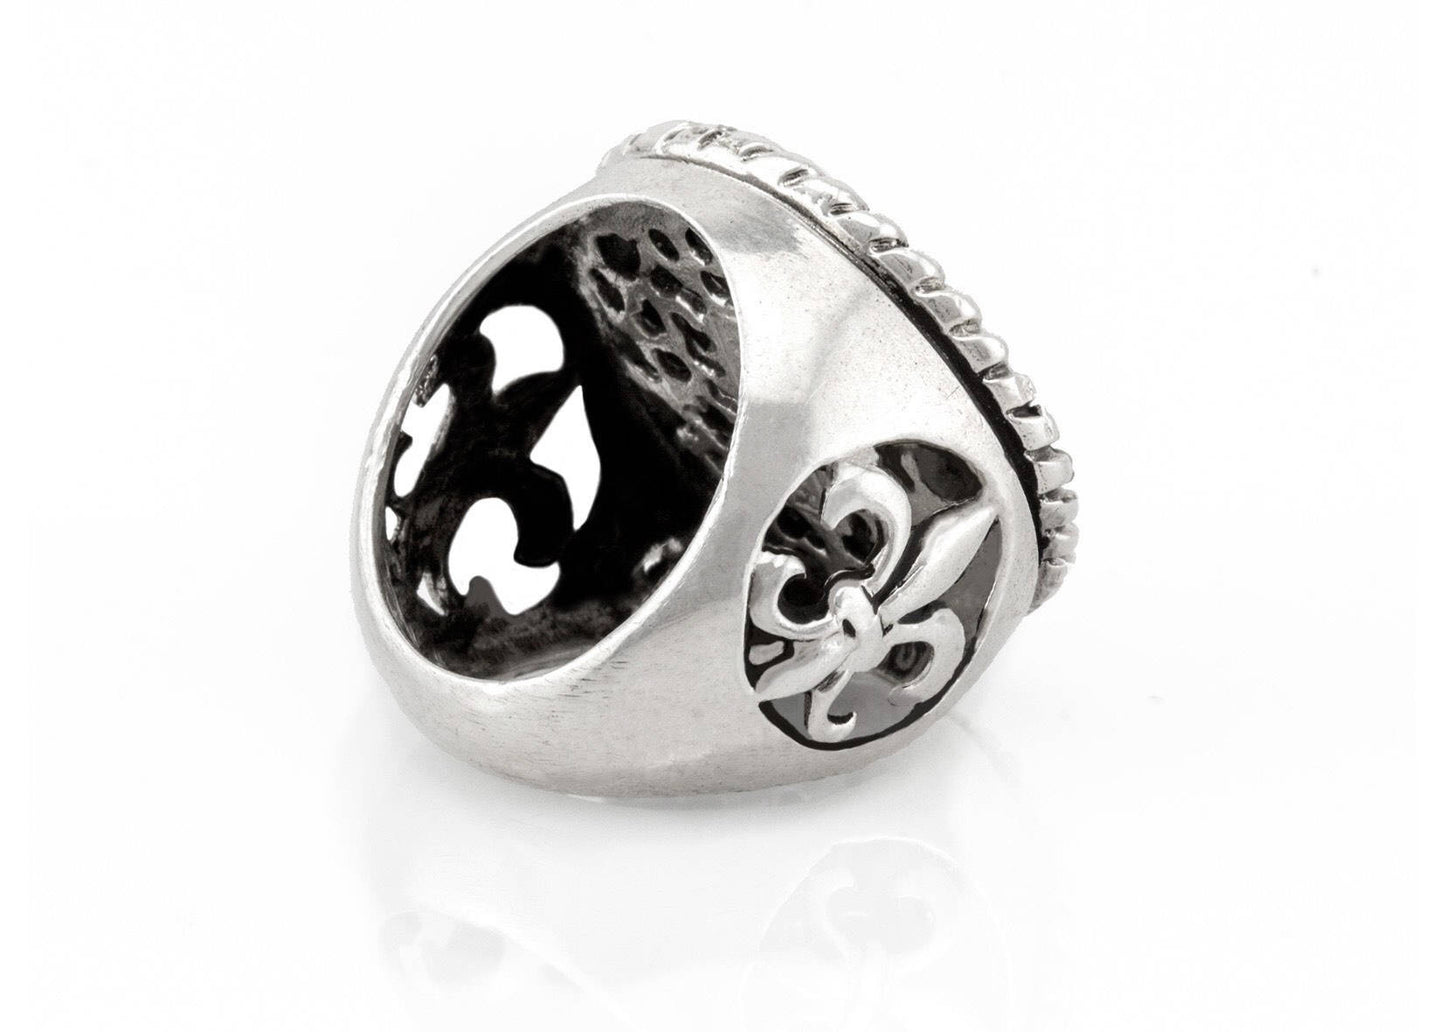 Kokopelli Medallion Ring, symbol of a Native American Fertility god ring, with fleur de lis symbol